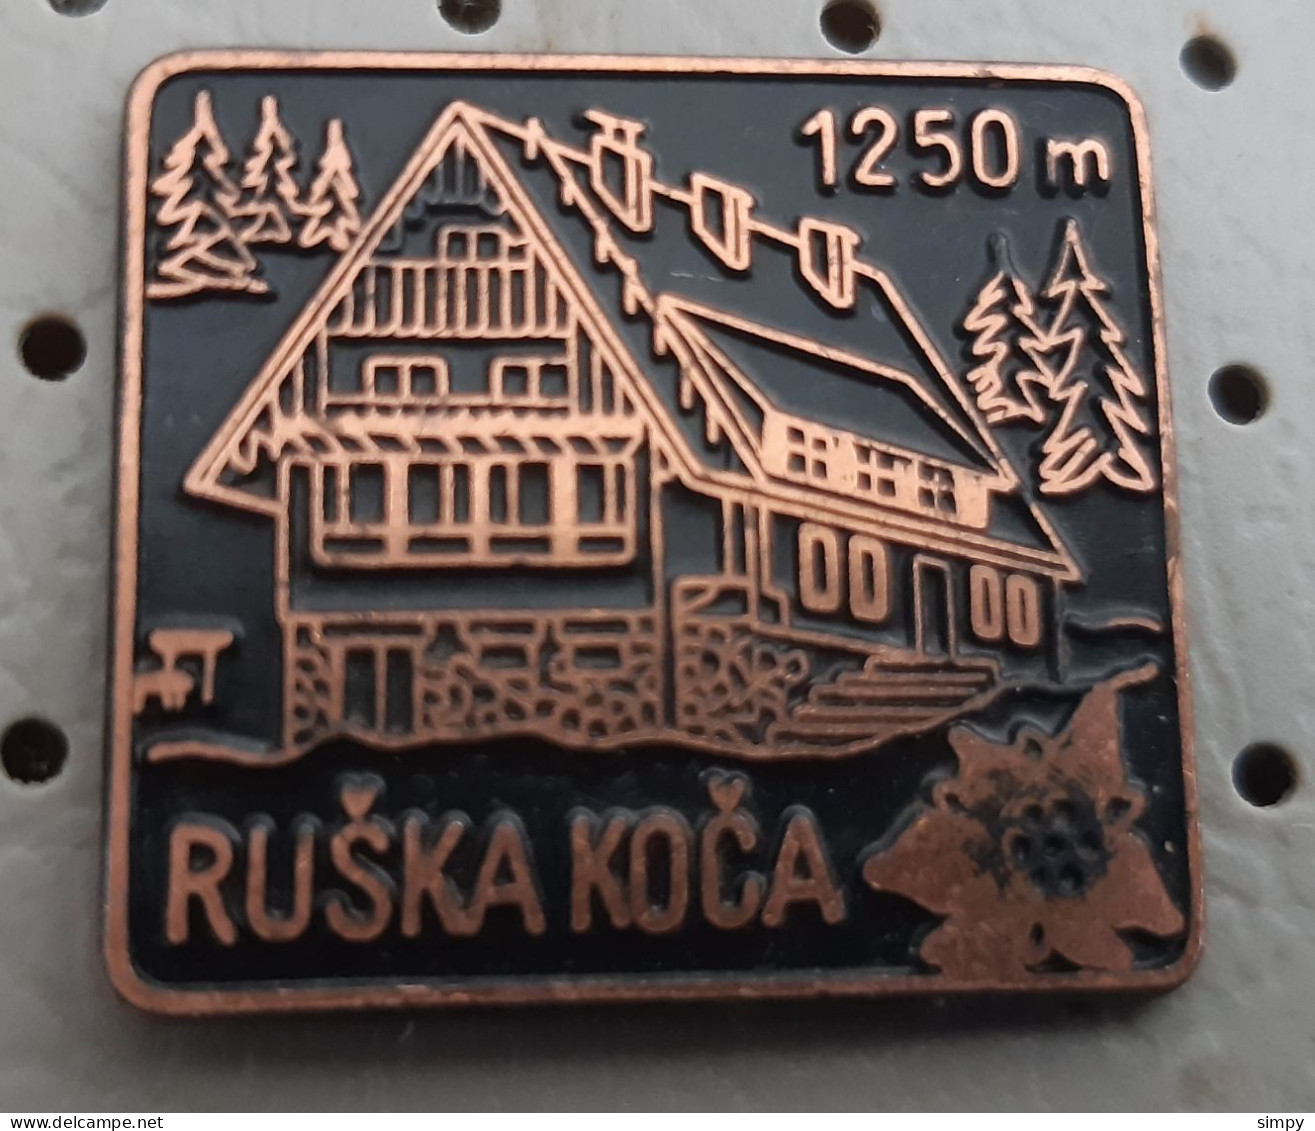 Ruska Koca 1250m Mountain Lodge Mountaineering Slovenia Ex Yugoslavia Pin - Alpinism, Mountaineering